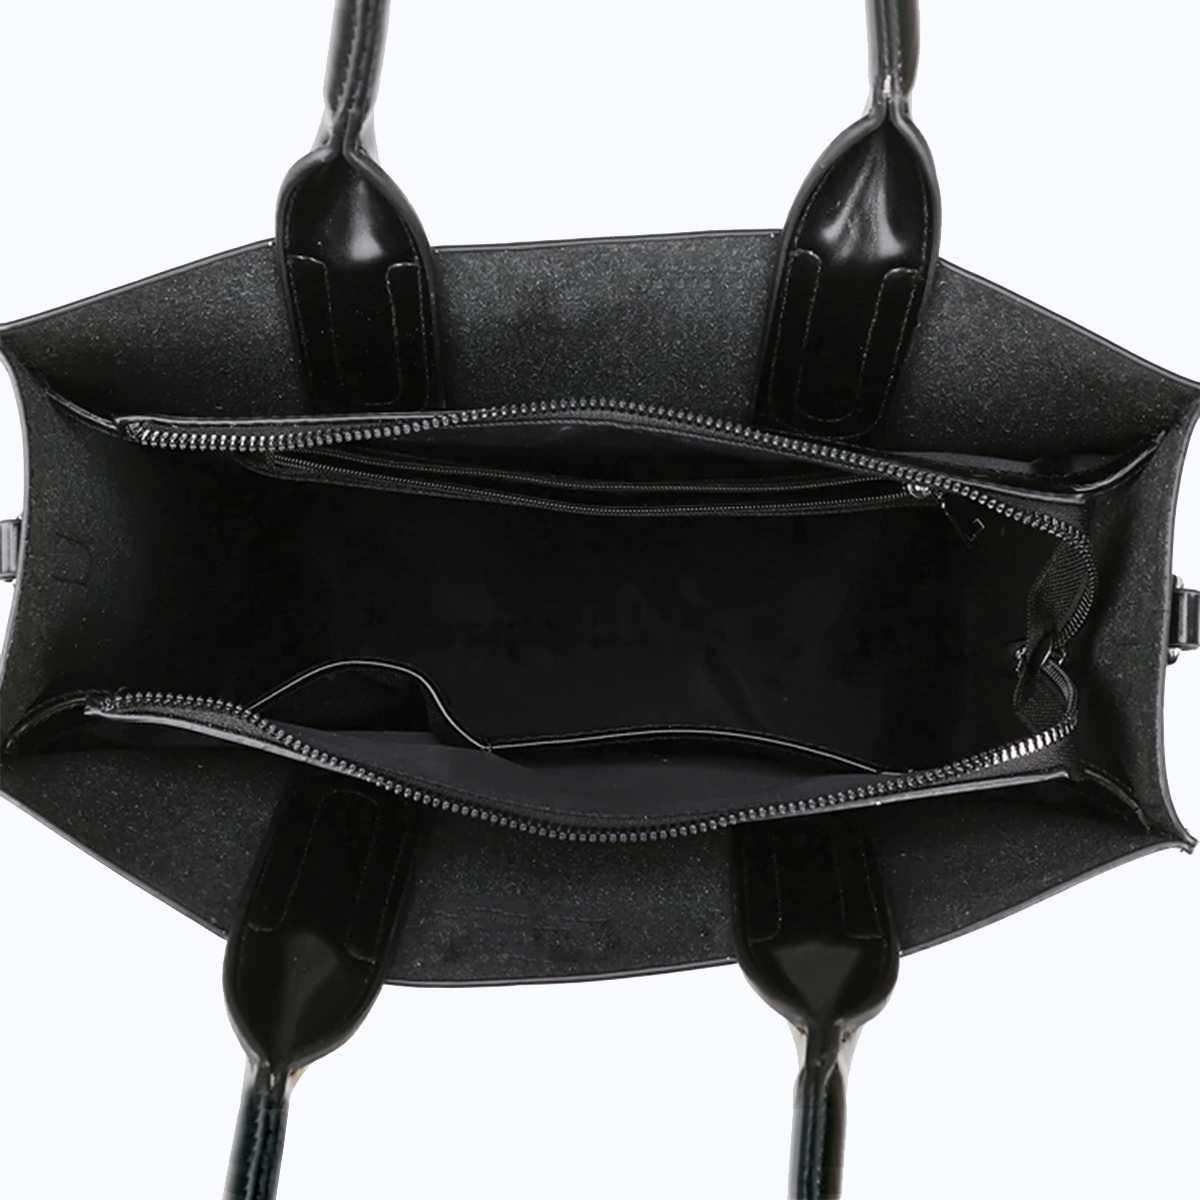 Griffon Bruxellois Luxury Handbag V1